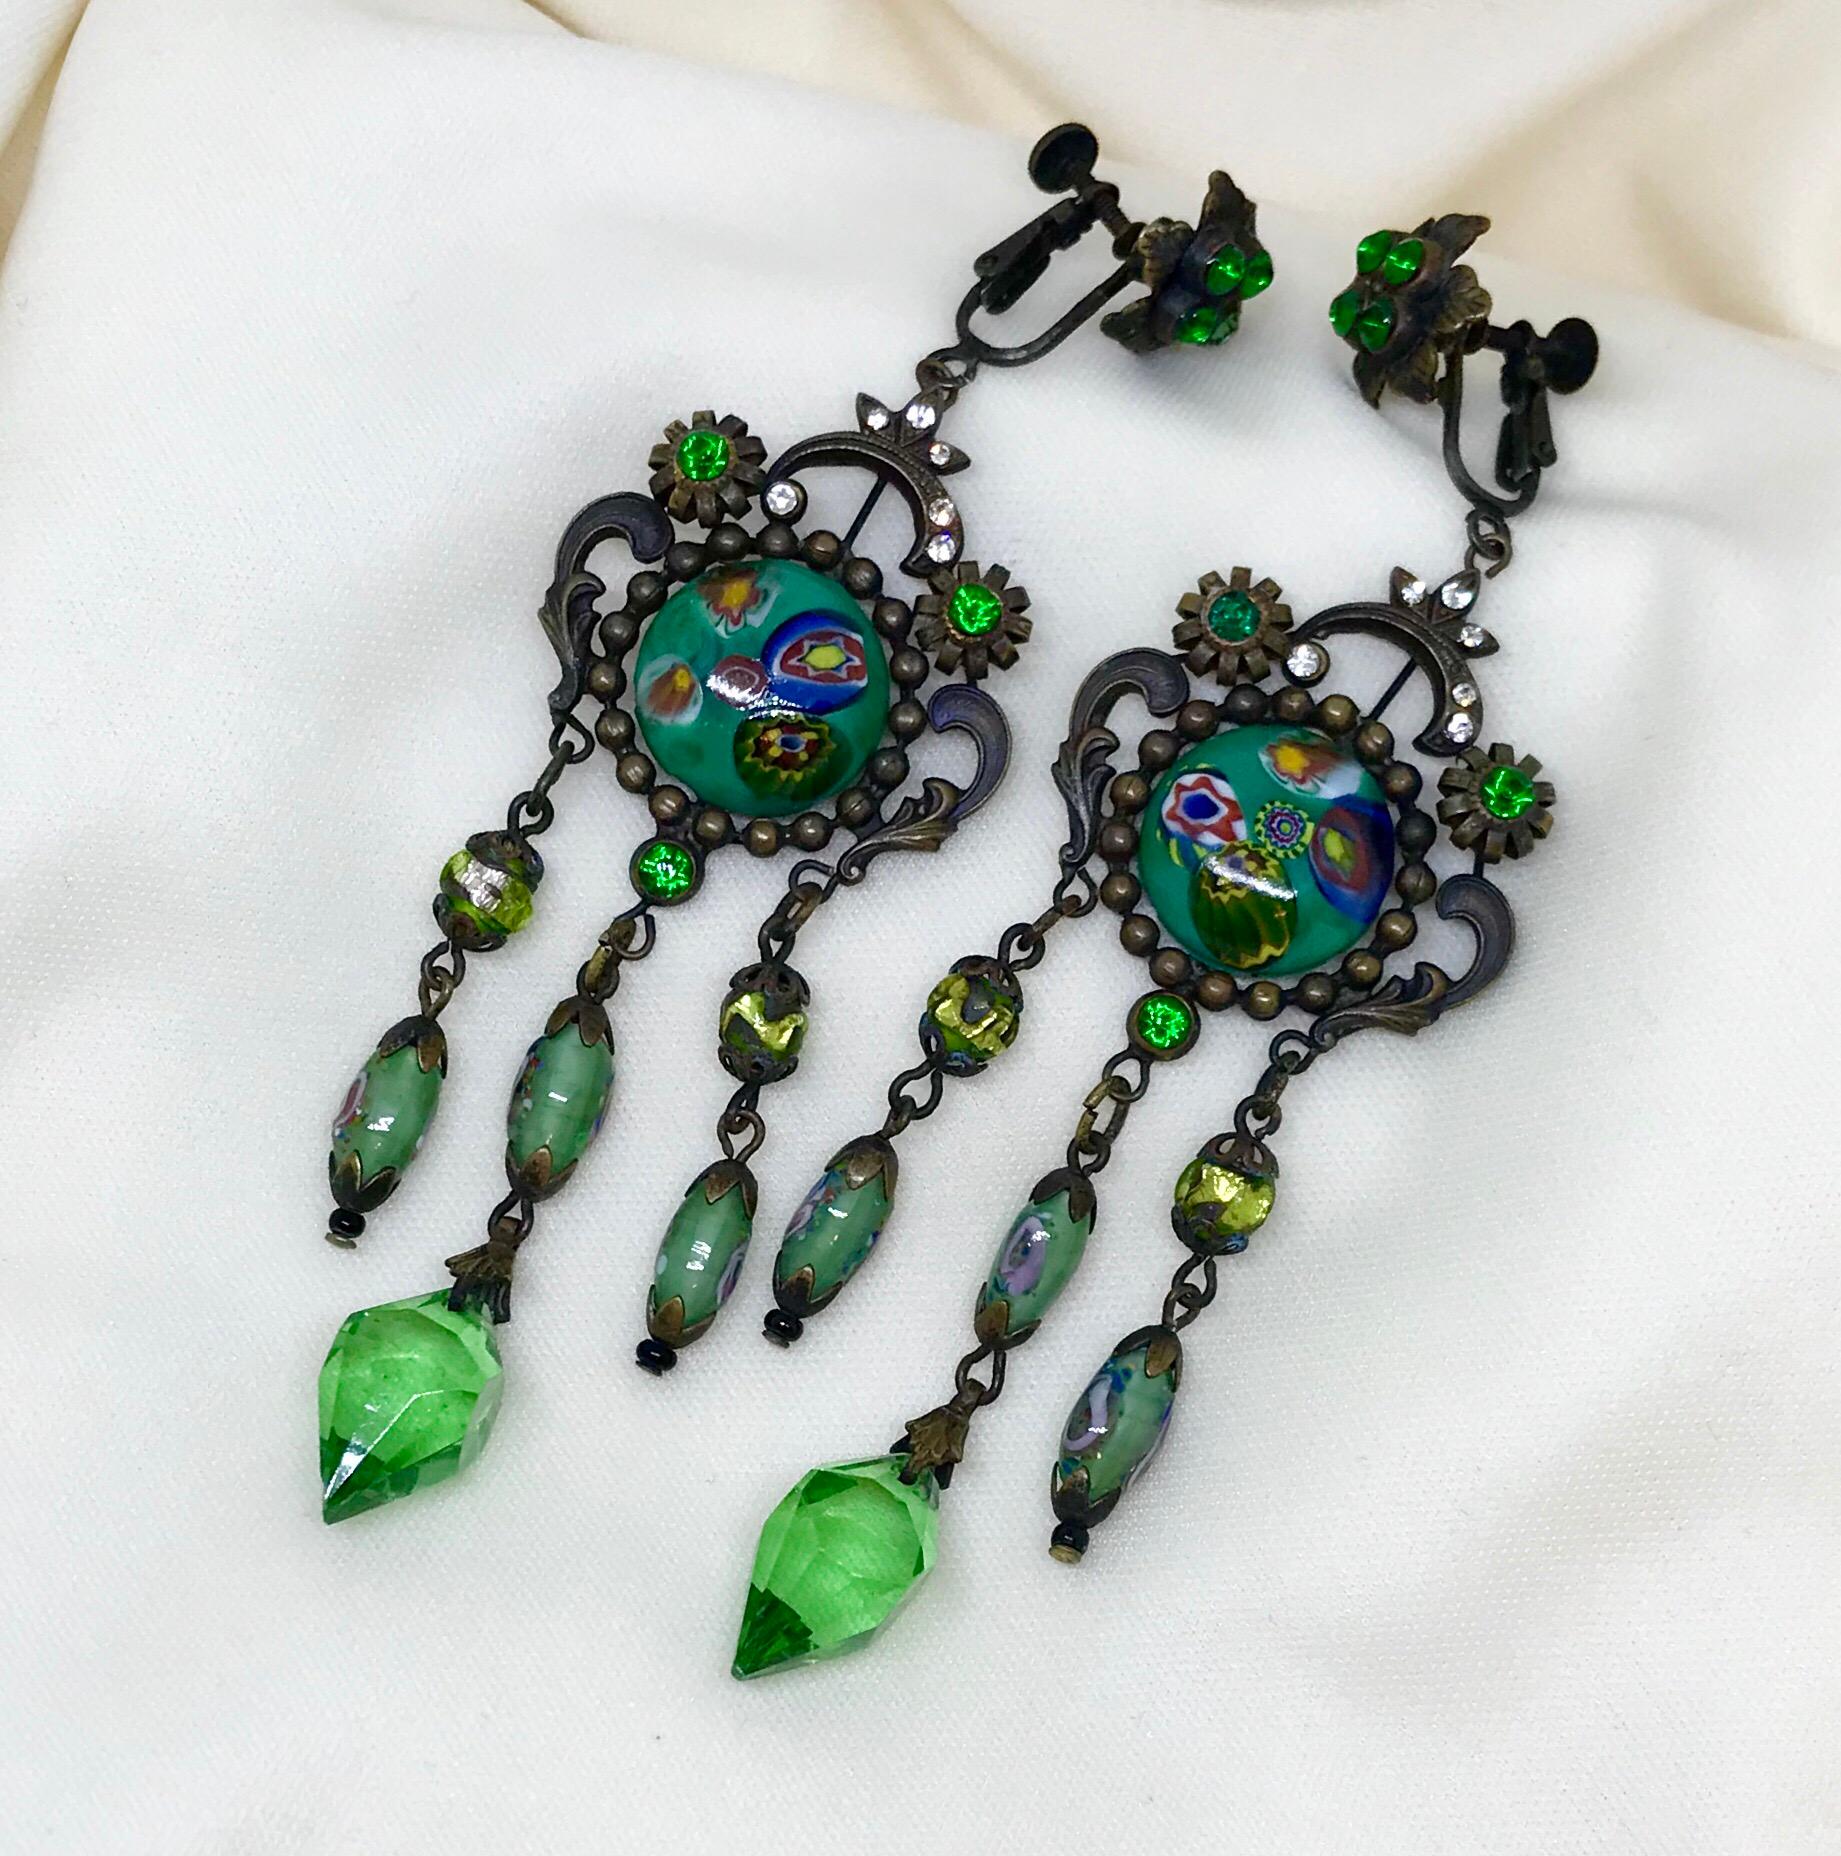 Green Czech Glass Long Dangling Chandelier Earrings With Screw-Clip Back In Good Condition For Sale In Long Beach, CA